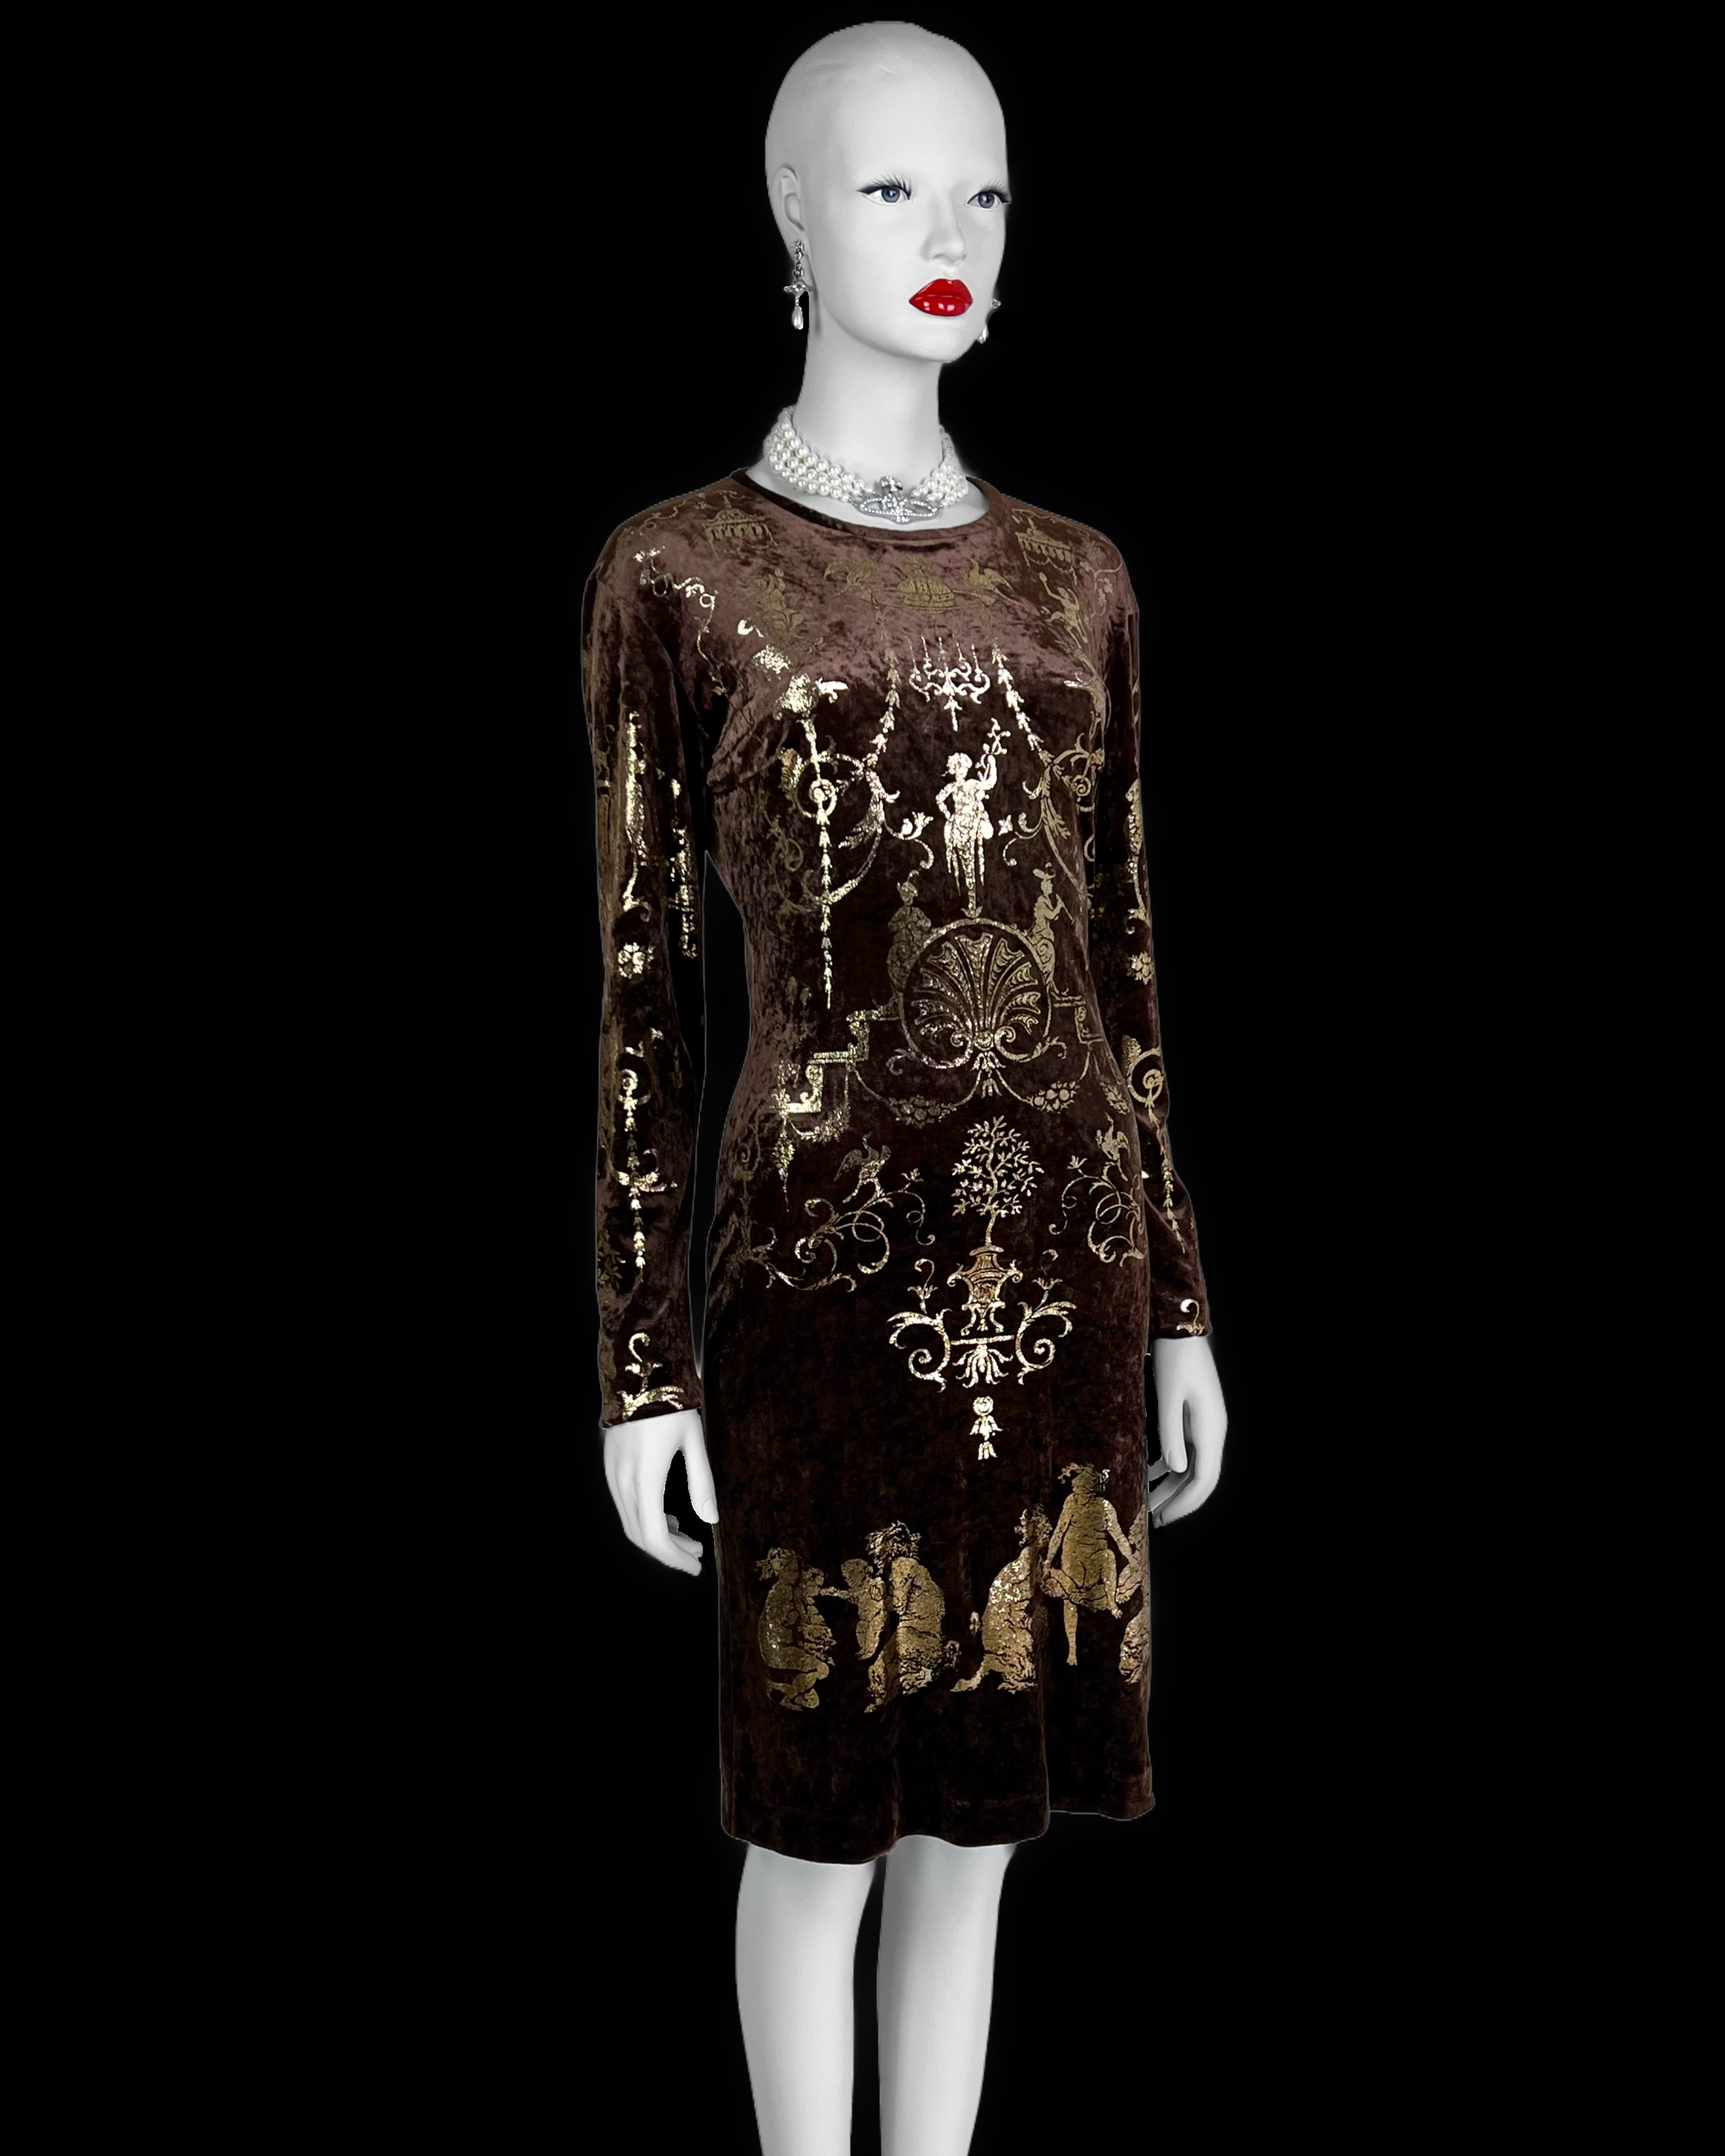 Vivienne Westwood Fall 1990 “Portrait Collection” Foiled “Boulle” Printed Velvet Bodycon Dress